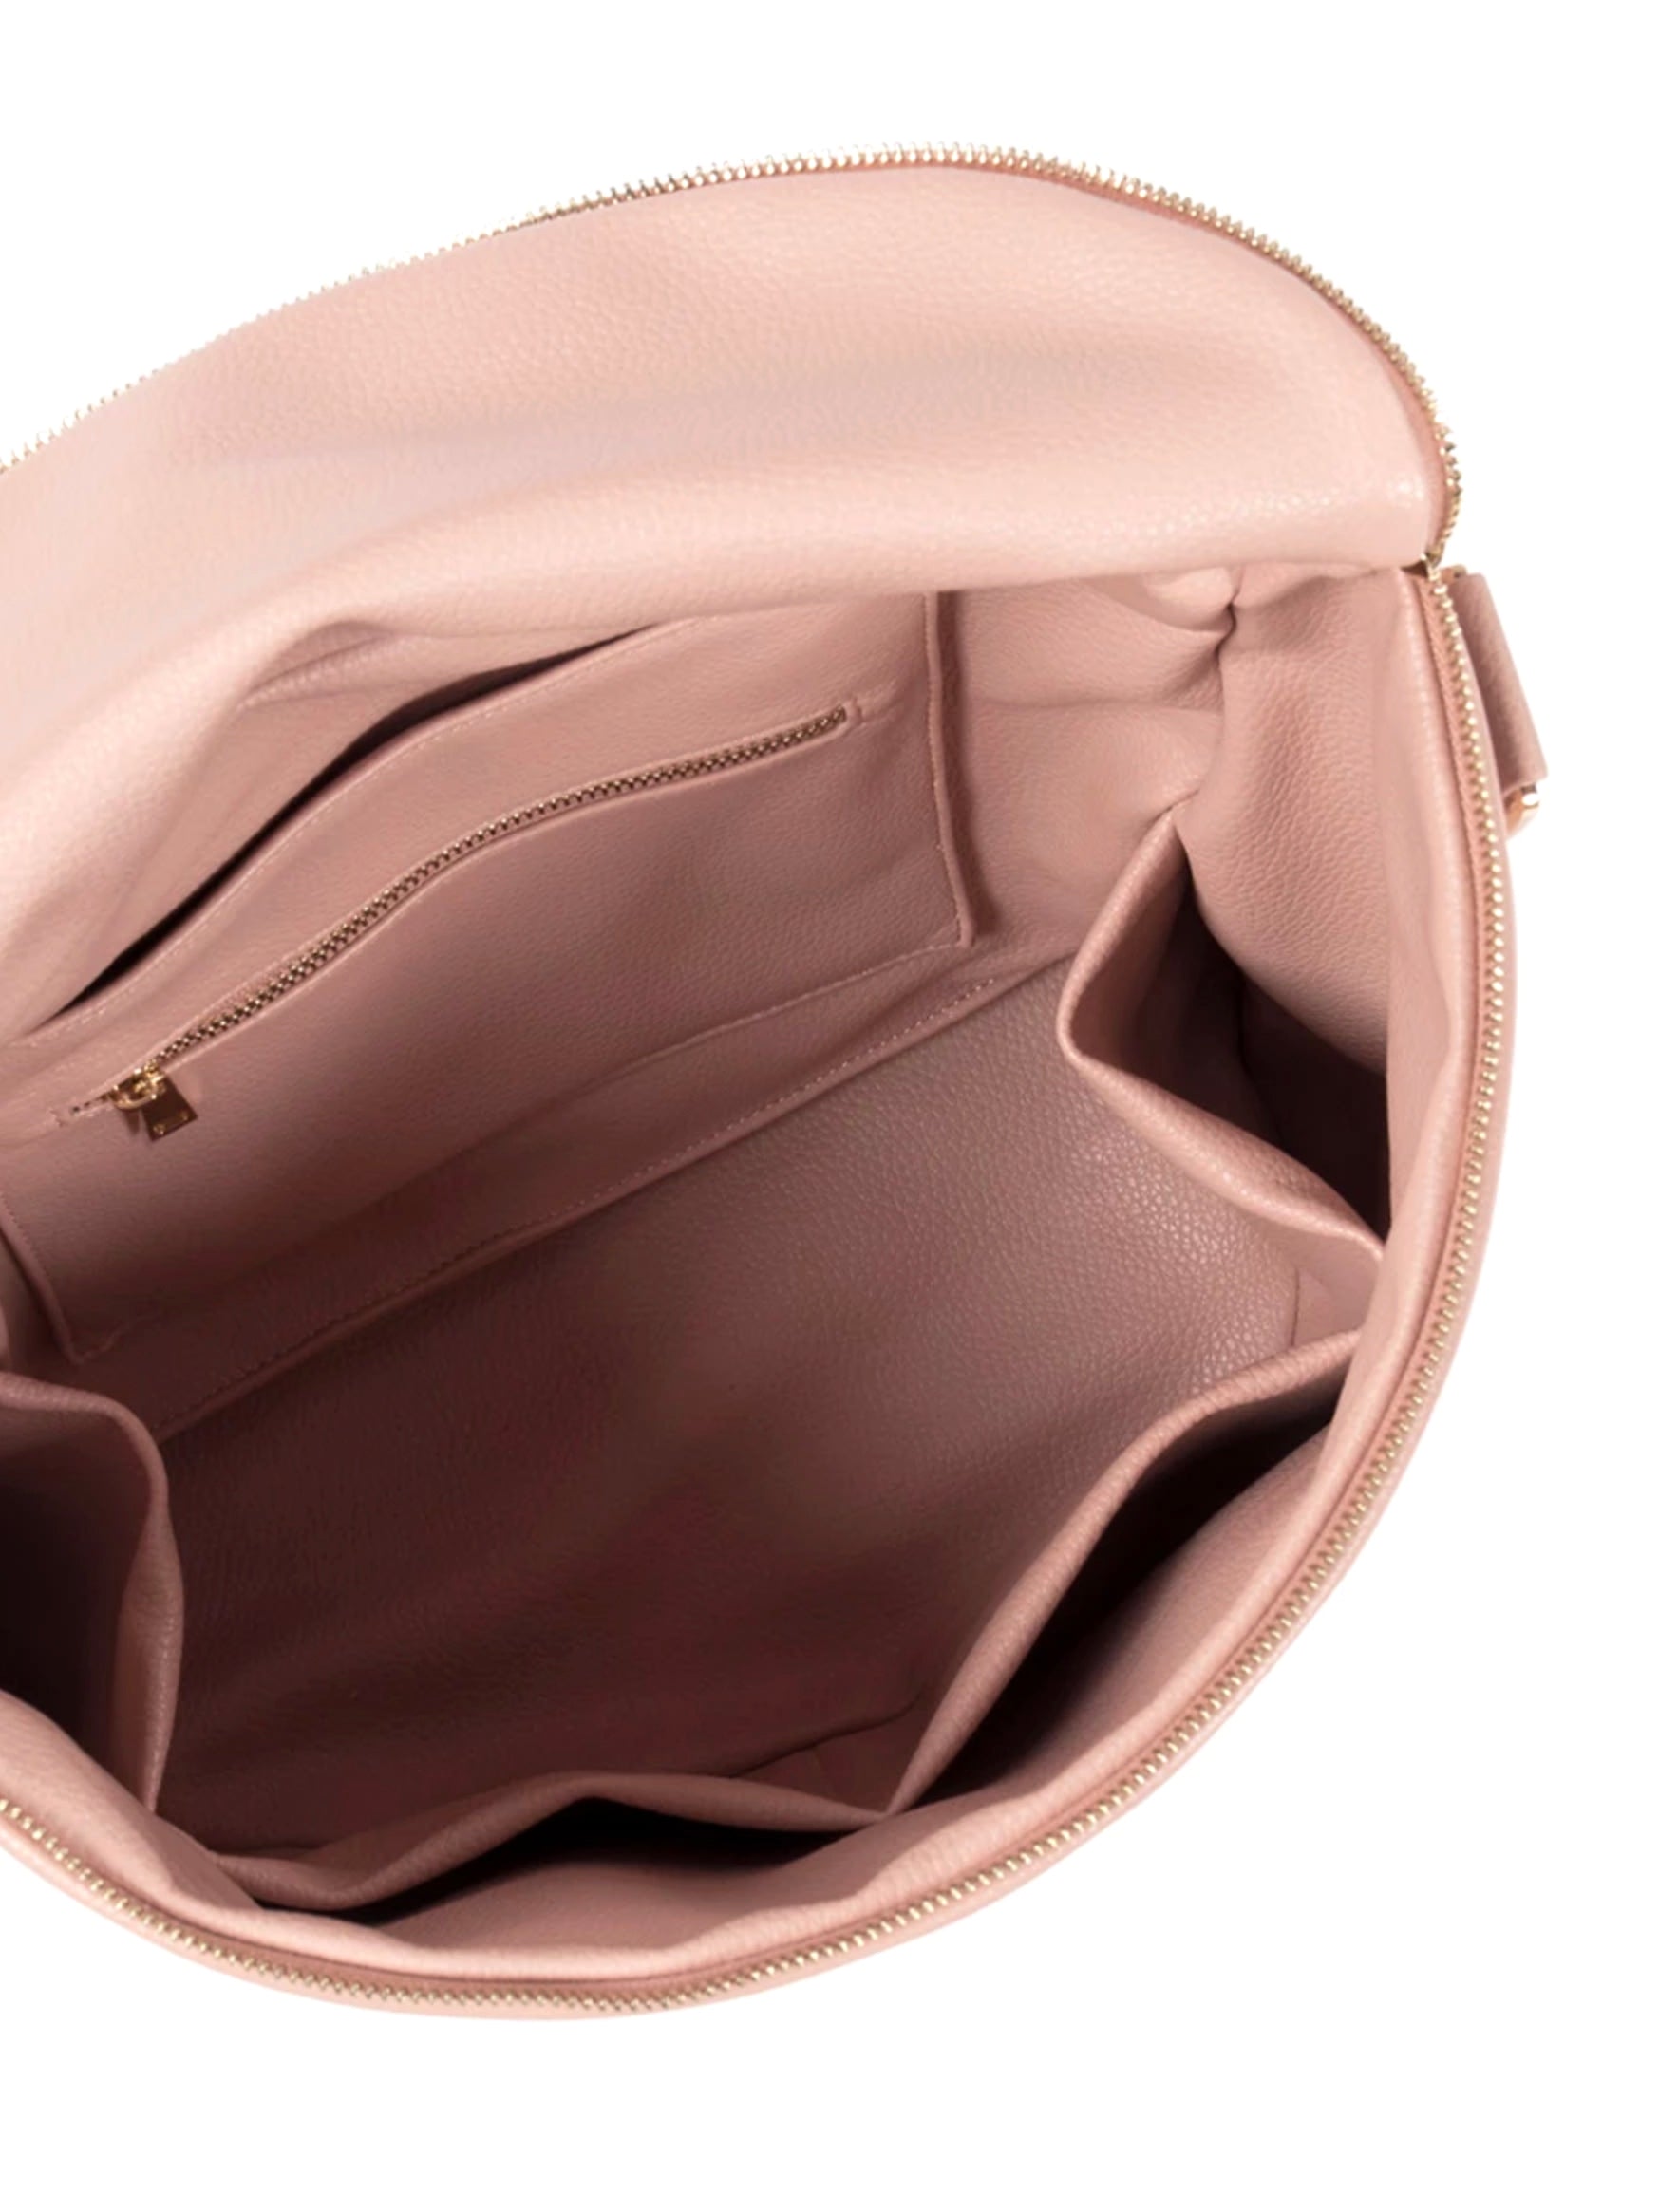 Fawn Design The Original Diaper bag - Bebe Lew